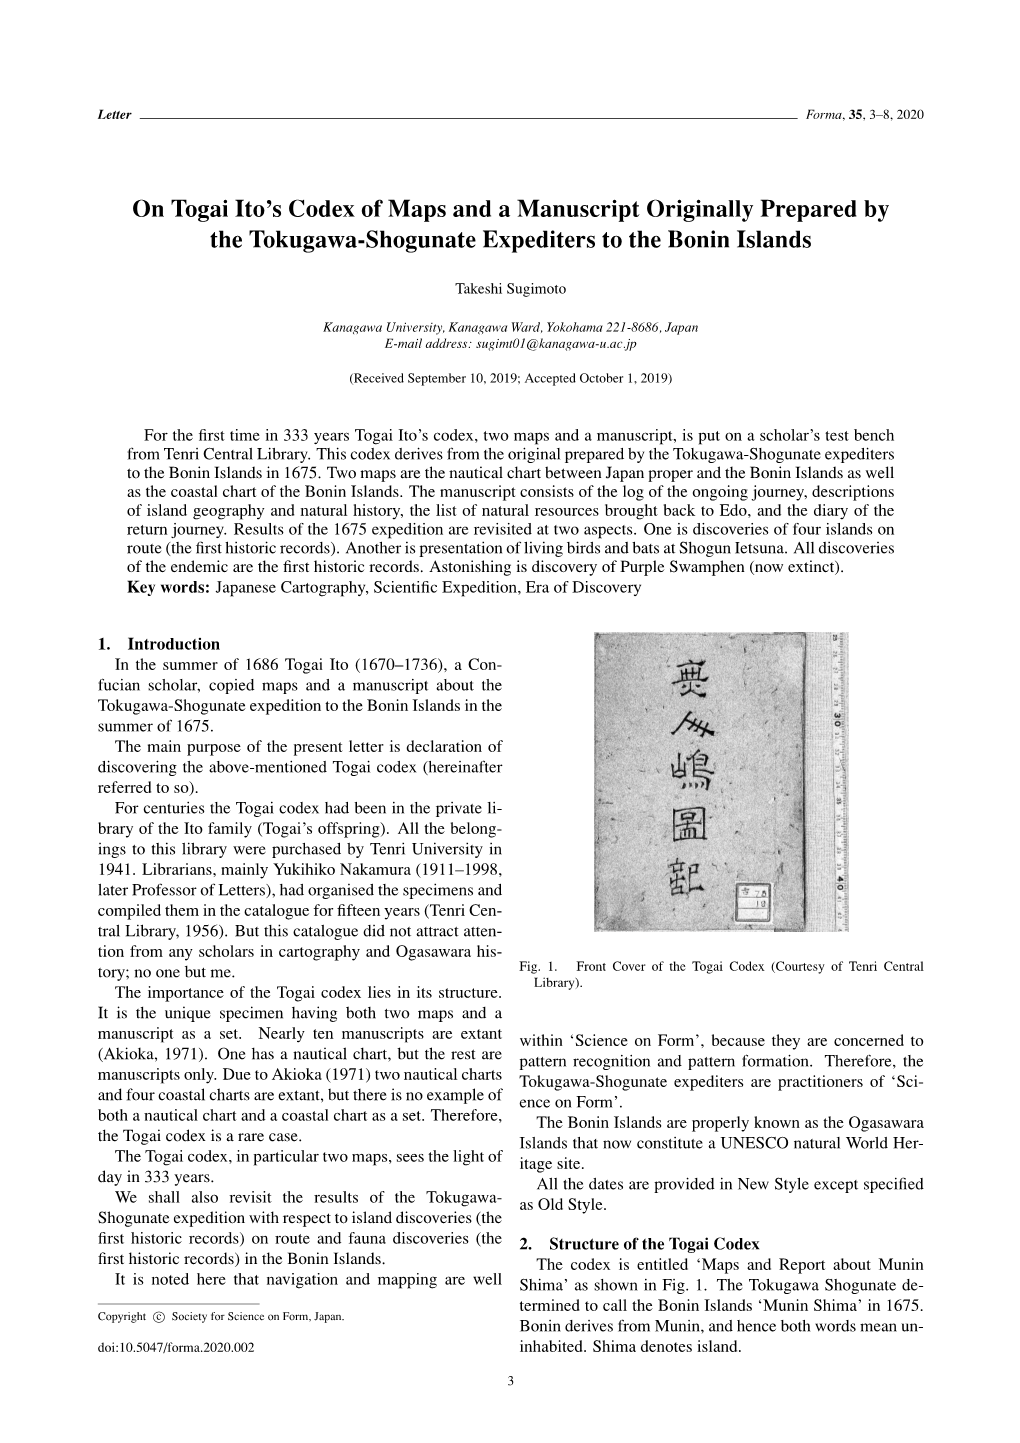 On Togai Ito's Codex of Maps and a Manuscript Originally Prepared by the Tokugawa-Shogunate Expediters to the Bonin Islands